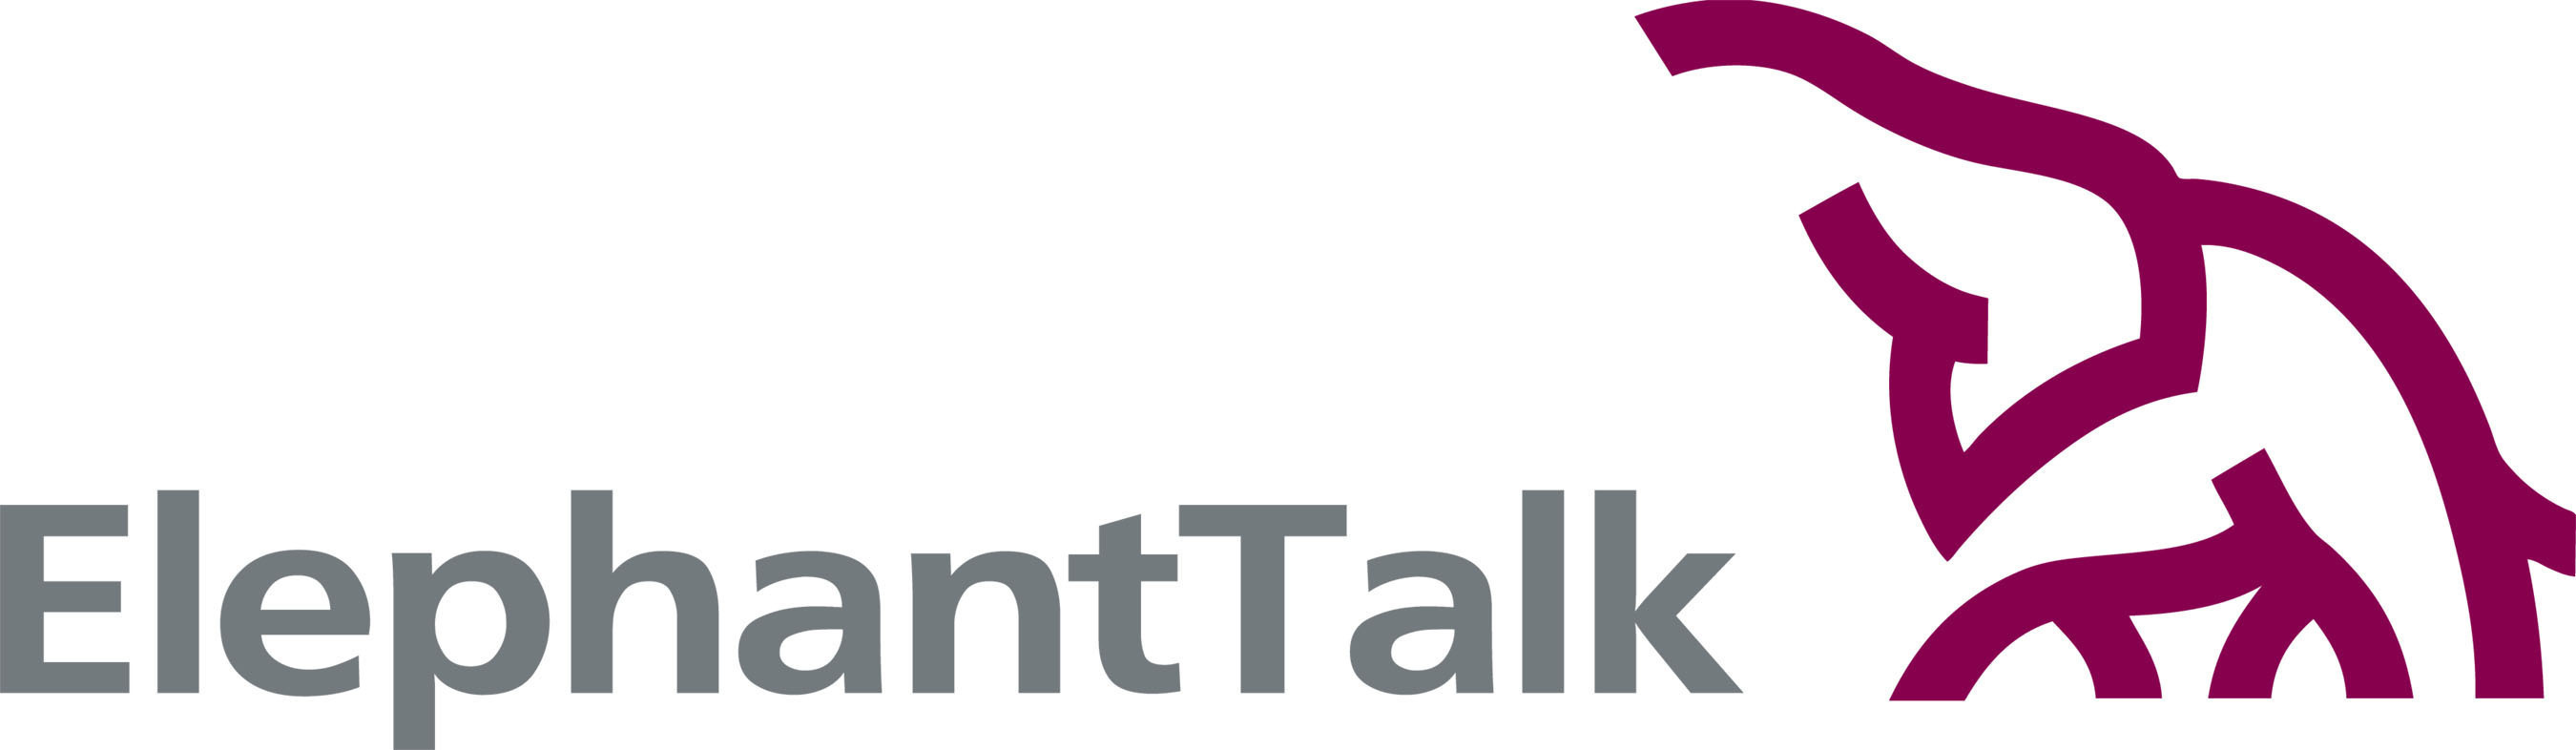 Elephant Talk Communications' Logo. (PRNewsFoto/Elephant Talk Communications, Corp.) (PRNewsFoto/)